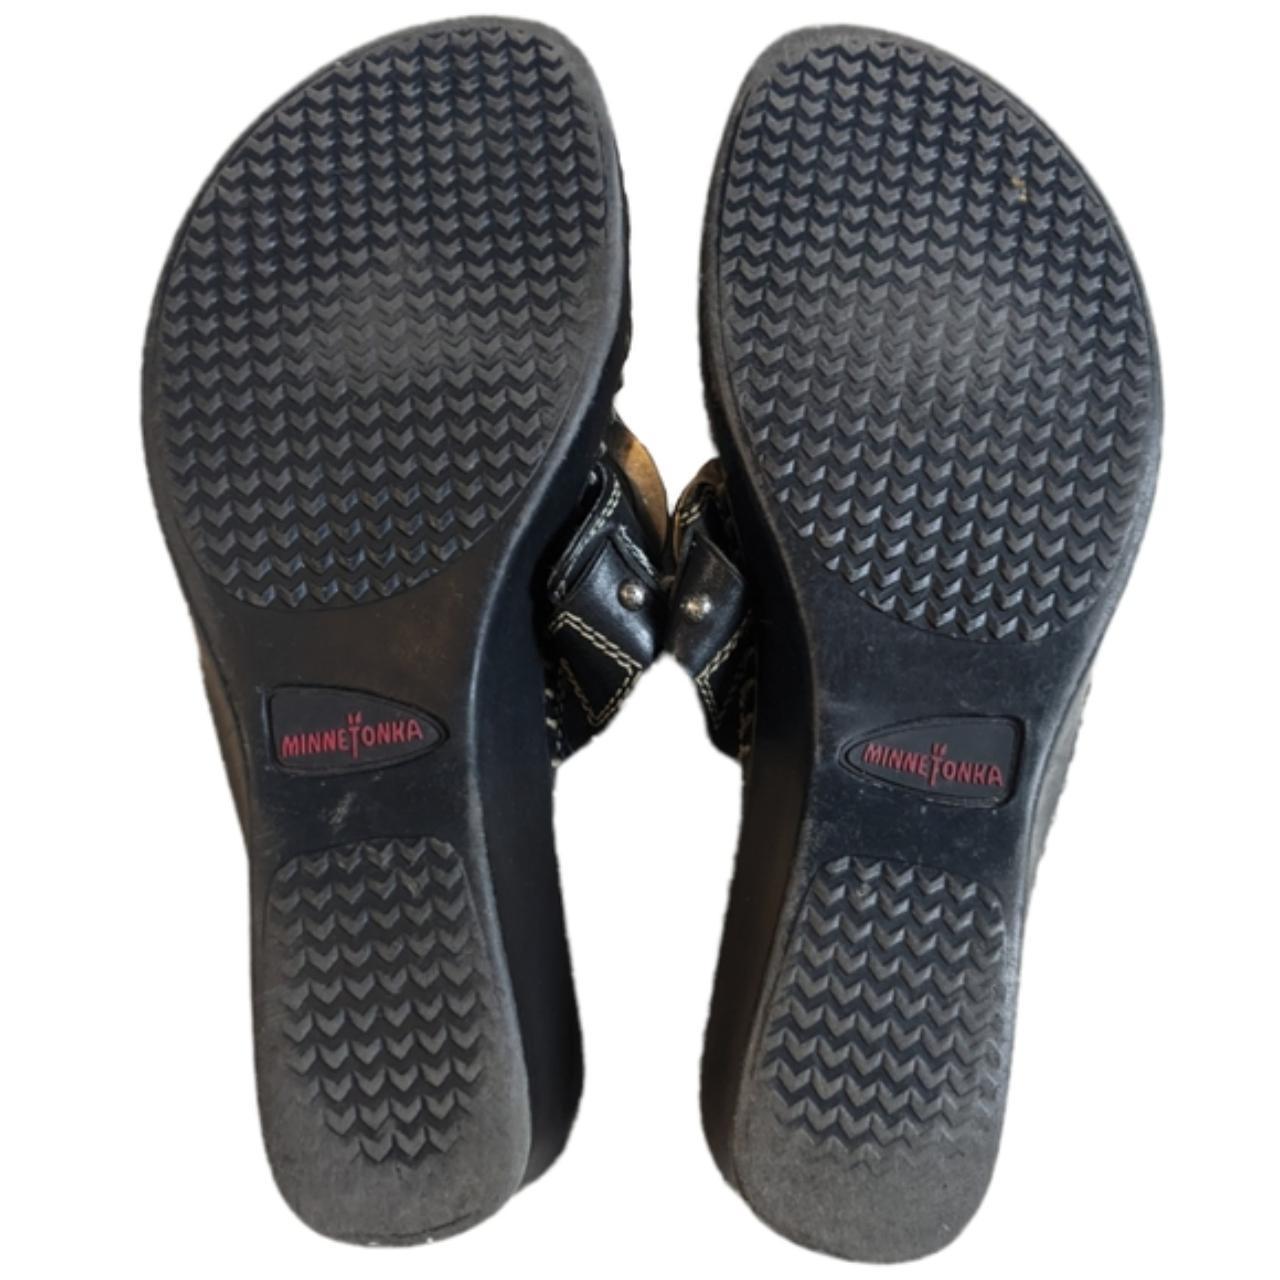 Product Image 3 - Minnetonka Boho Wedge Heel Sandal

Super